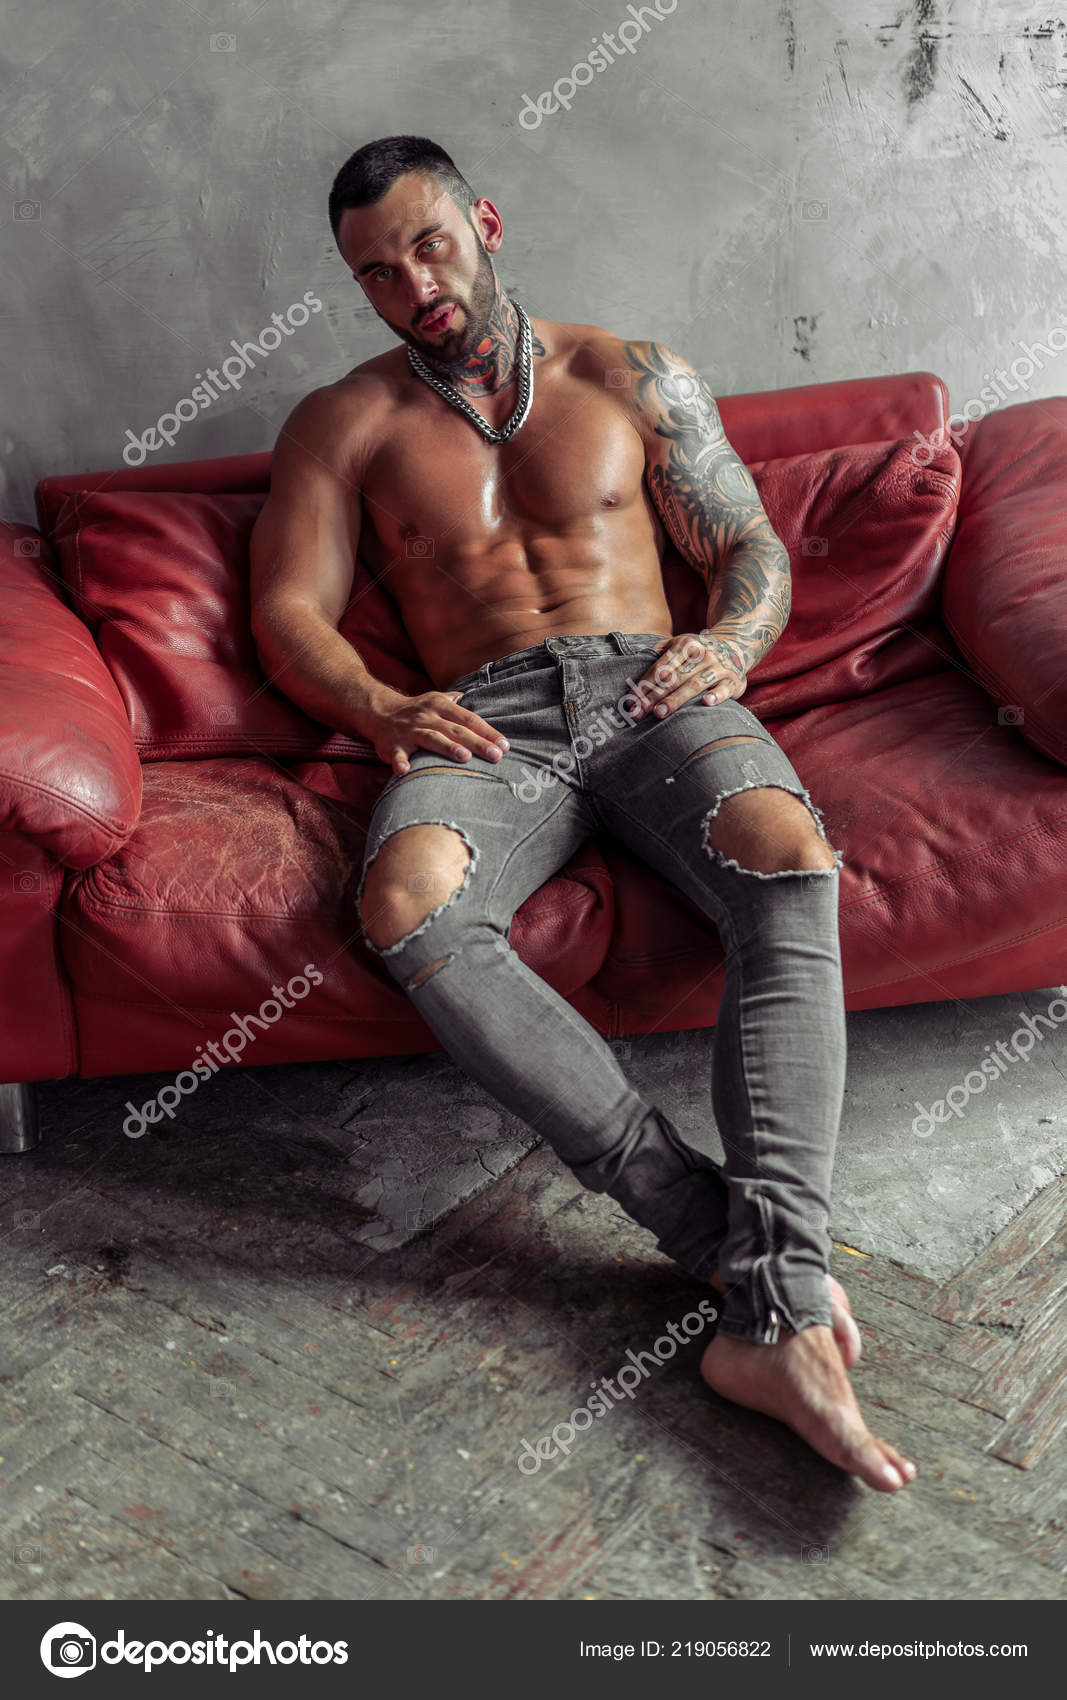 male sexy model tattoo